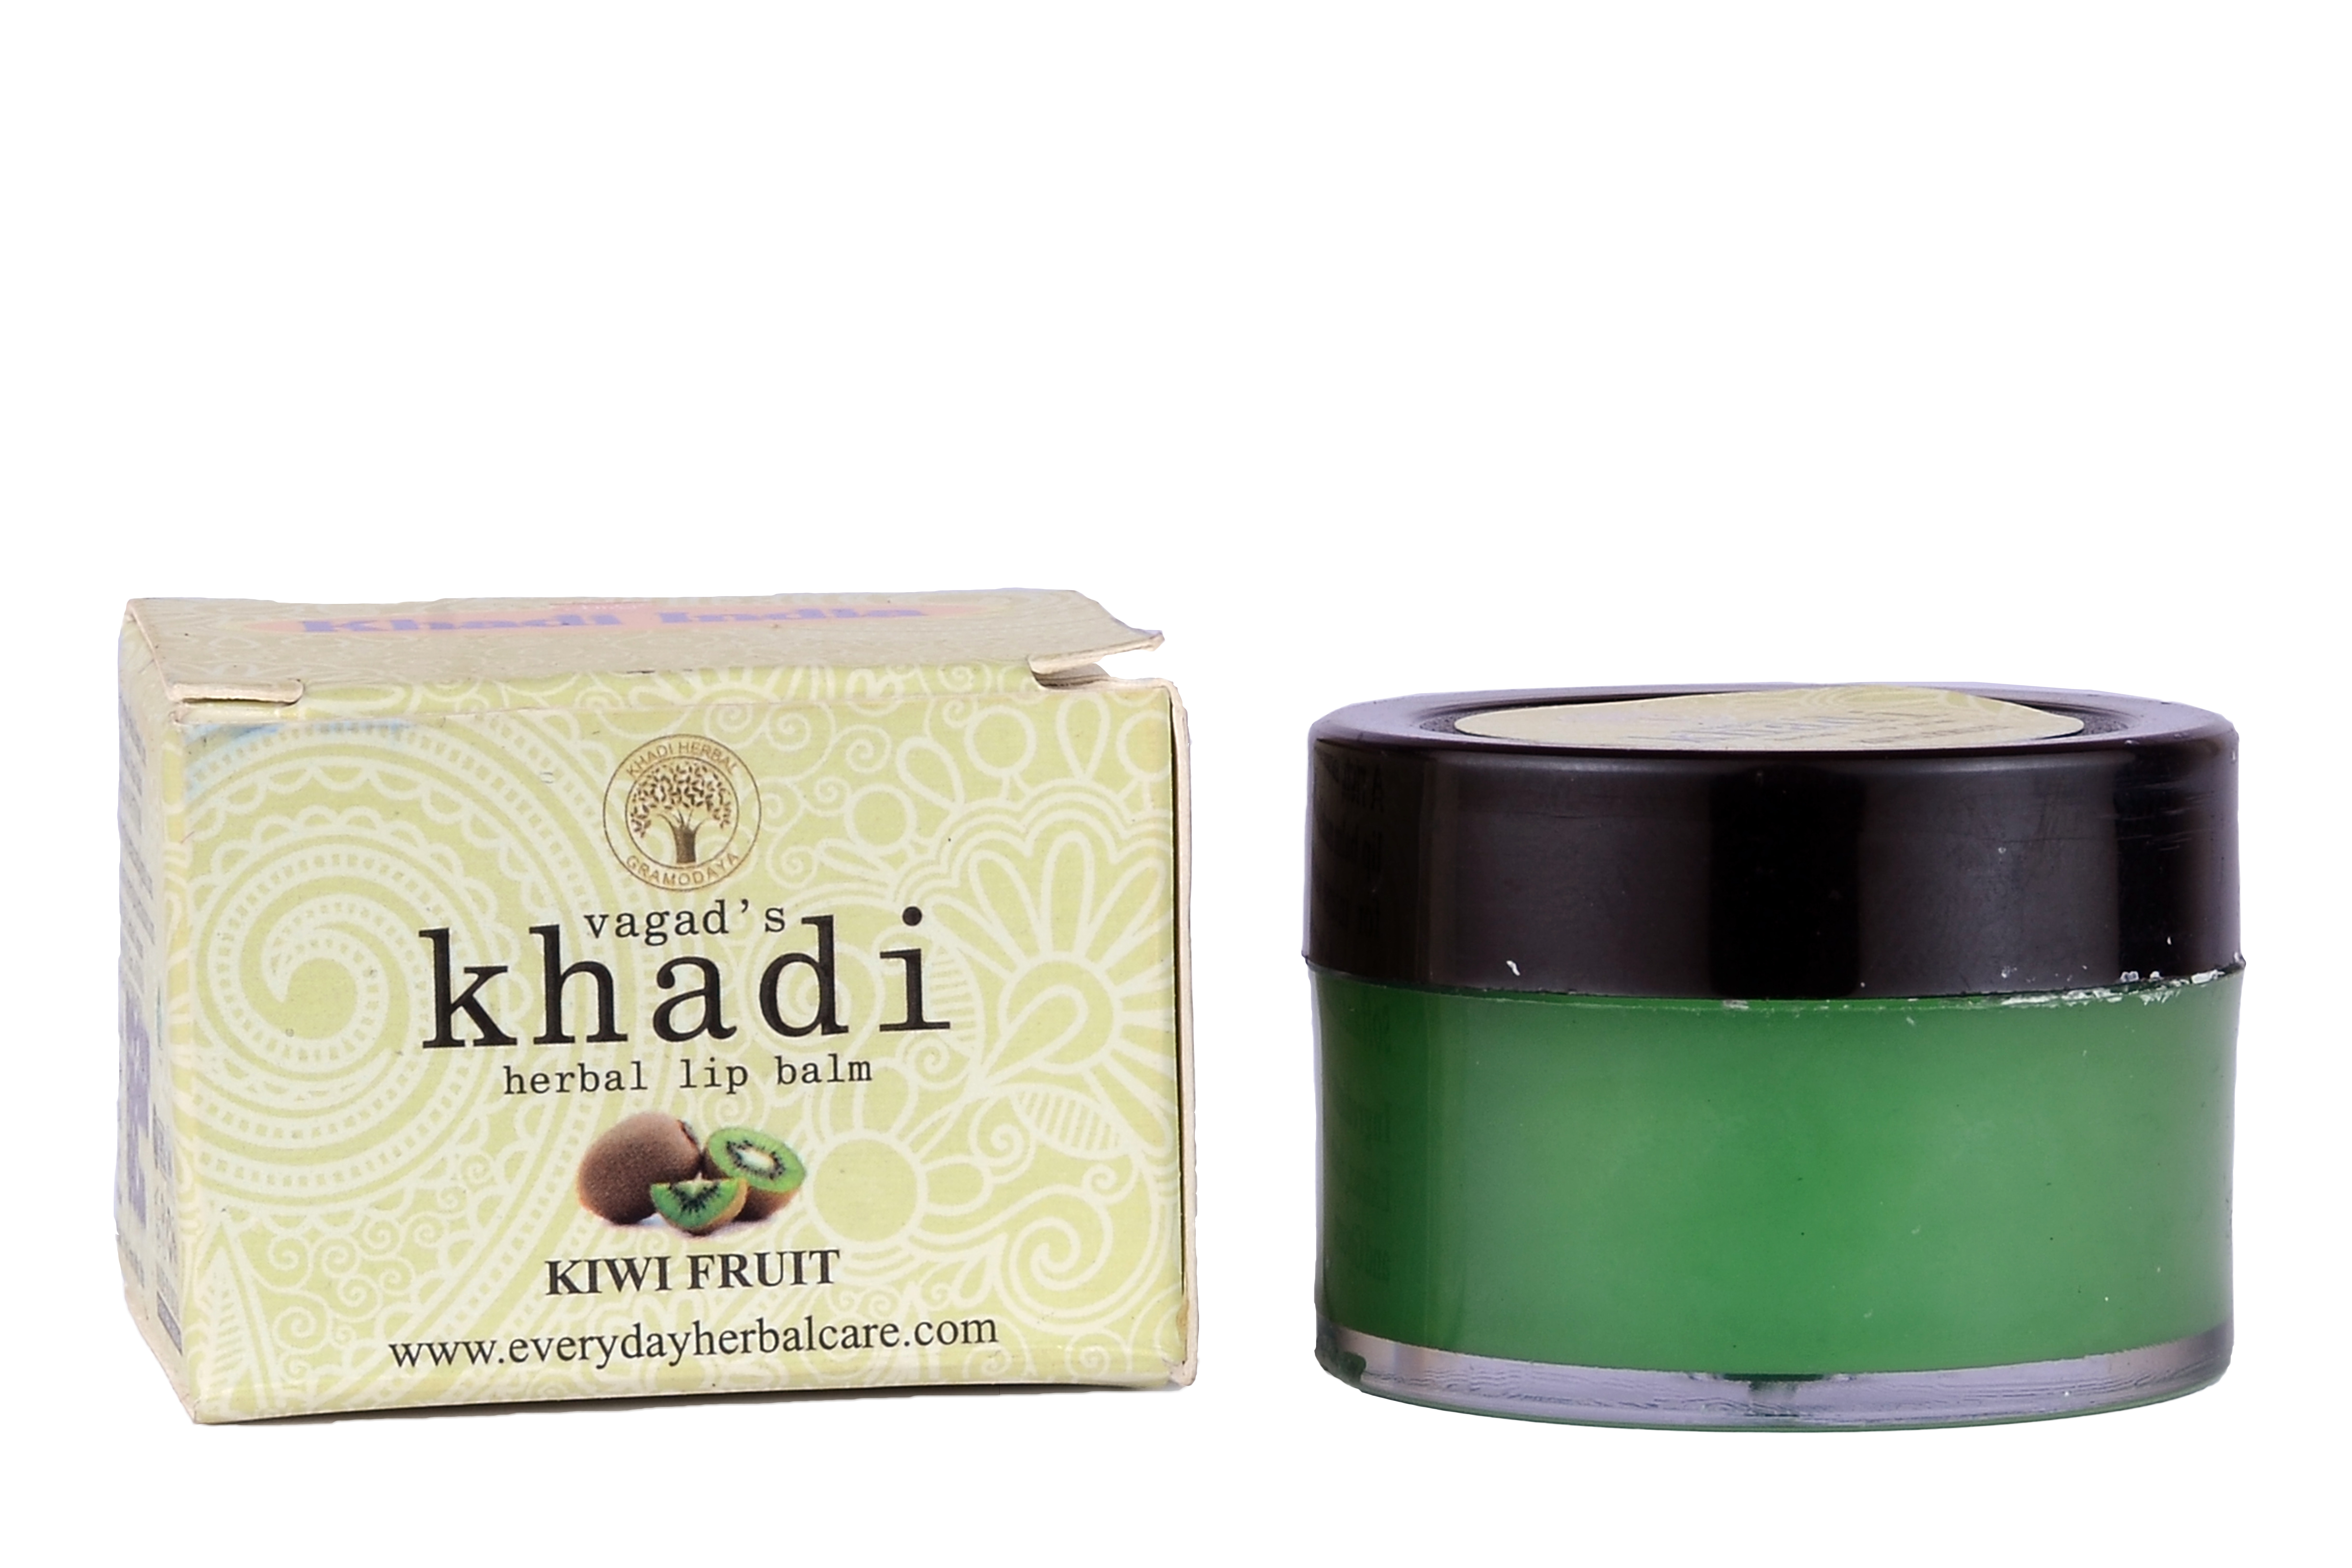 Buy Vagad's Khadi Kiwi Fruit Lip Balm at Best Price Online